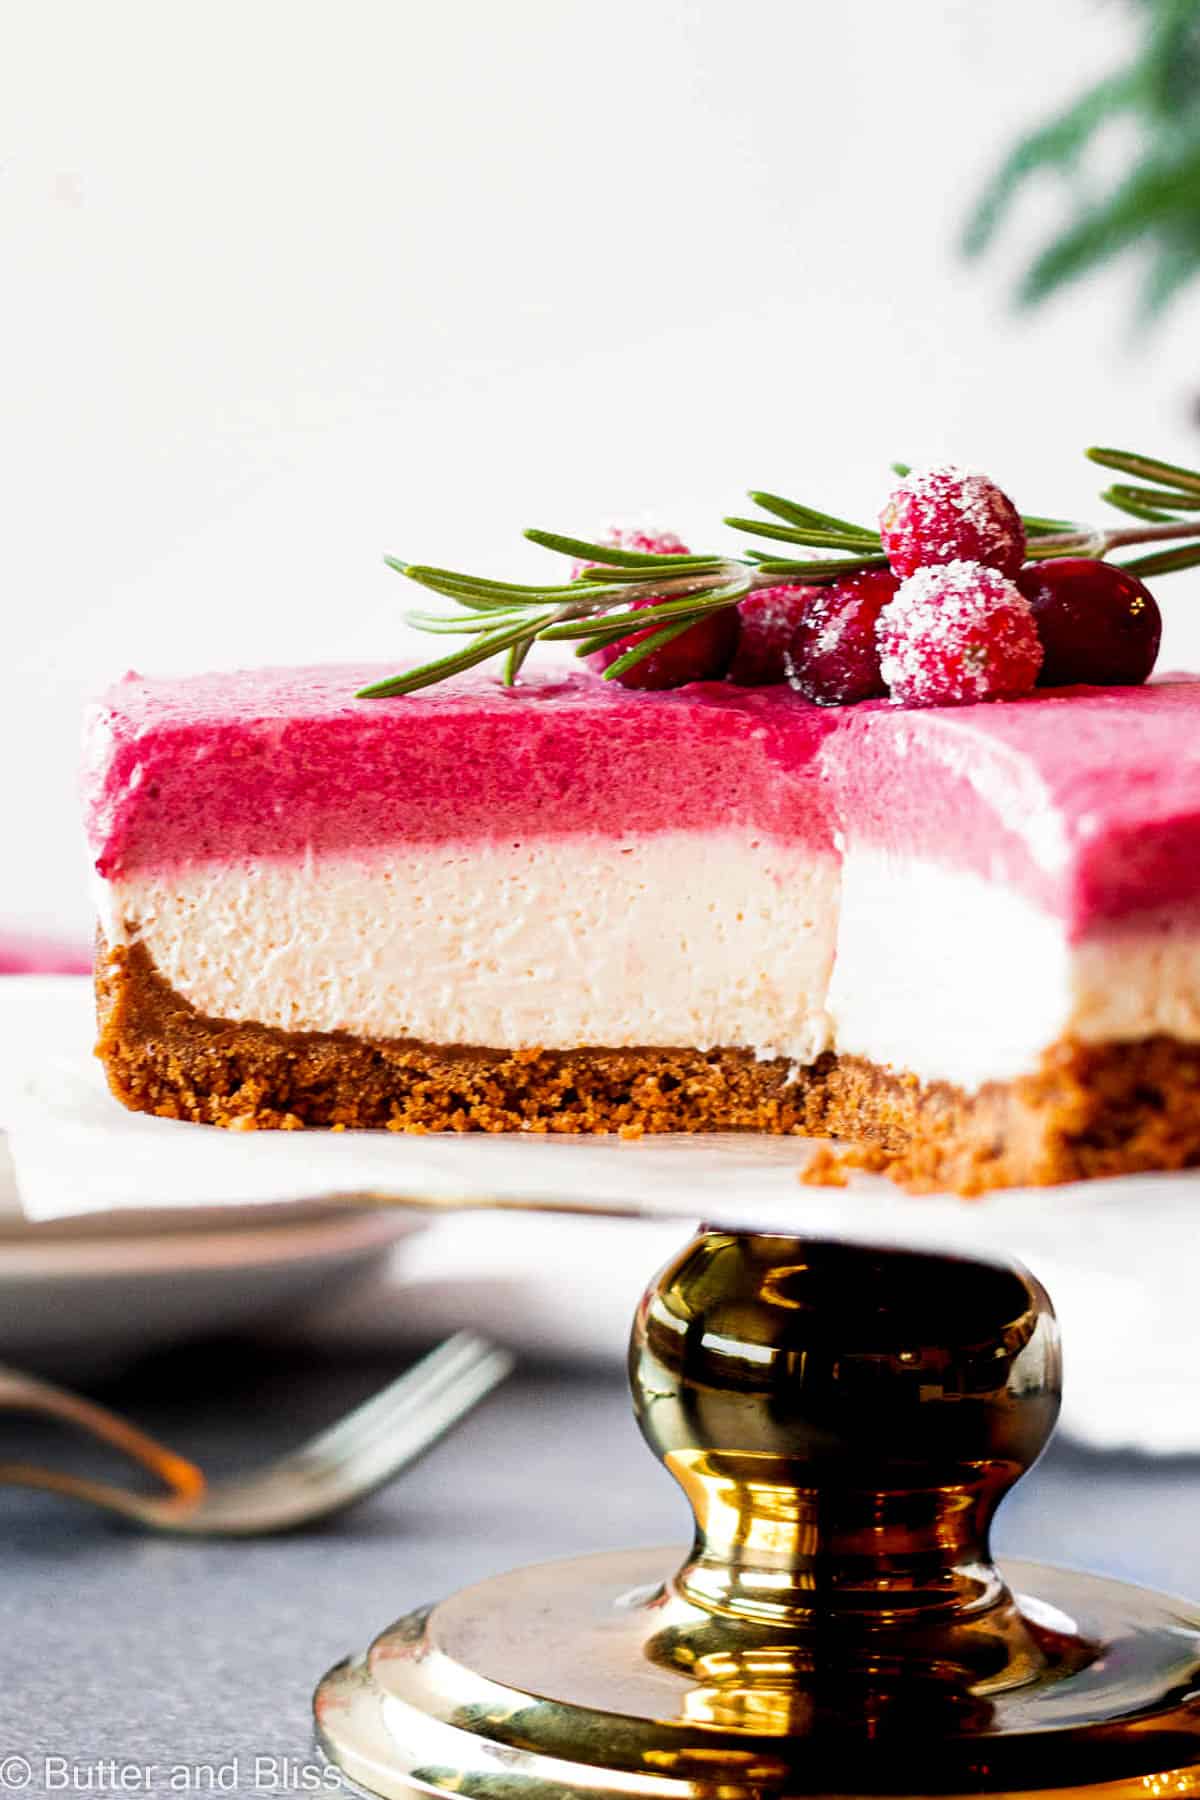 Super creamy interior of a cranberry cheesecake on a pretty cake stand.